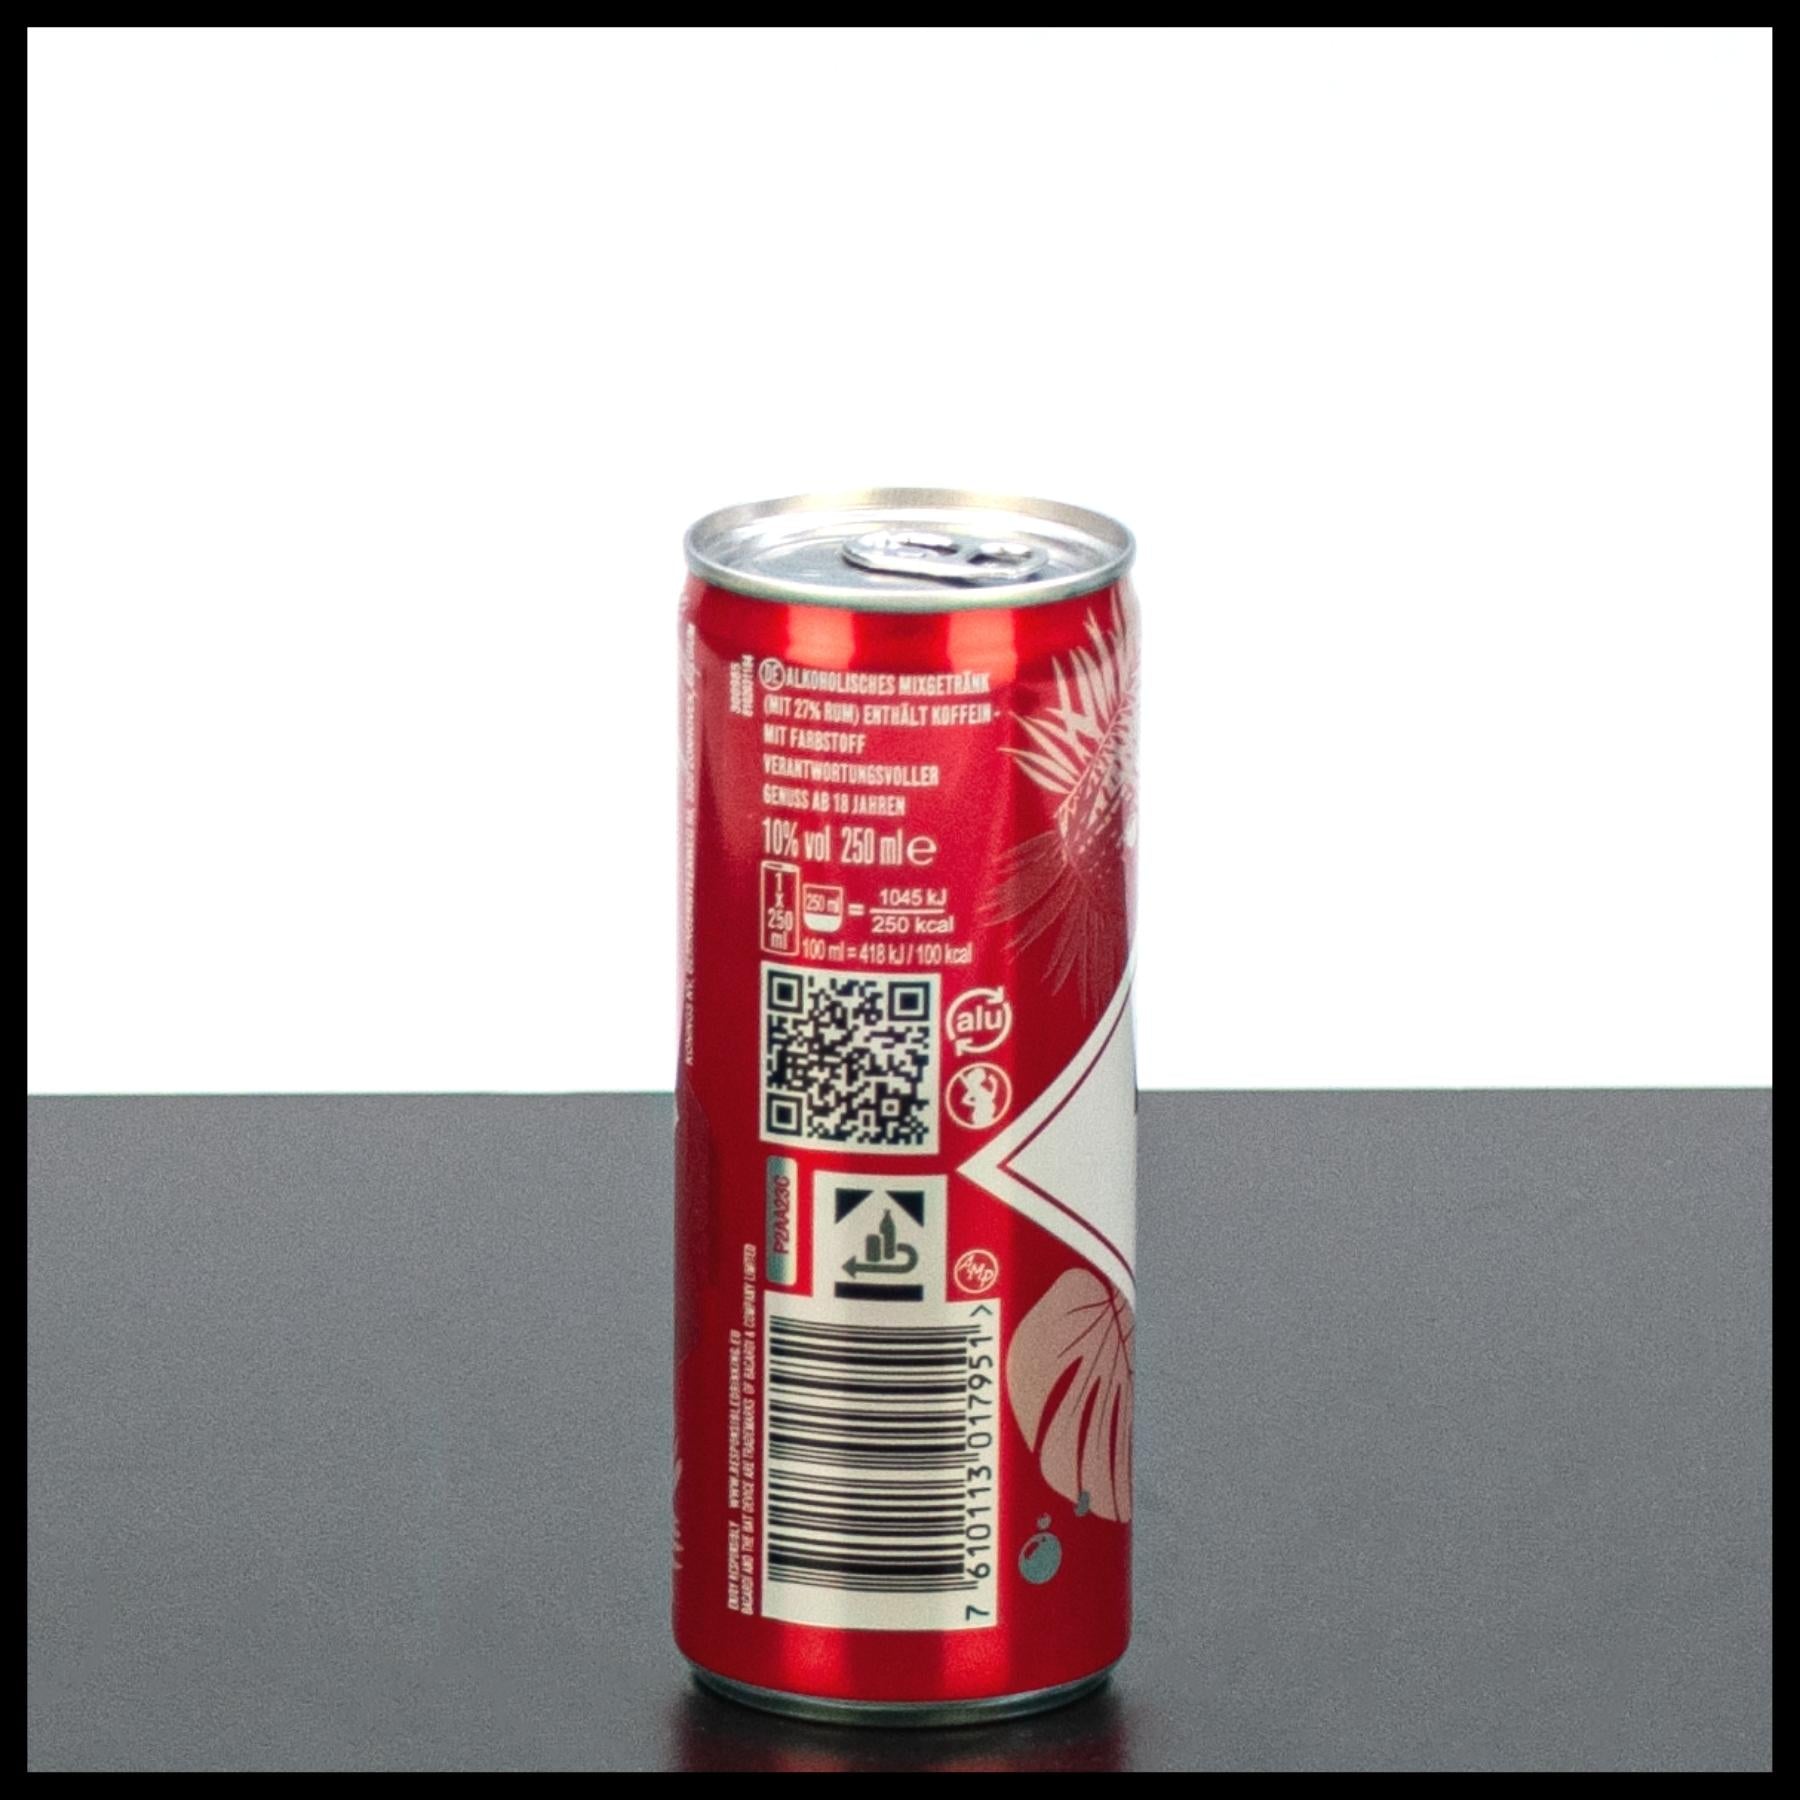 Bacardi Rum & Cola 0,25L - 10% Vol. - Trinklusiv